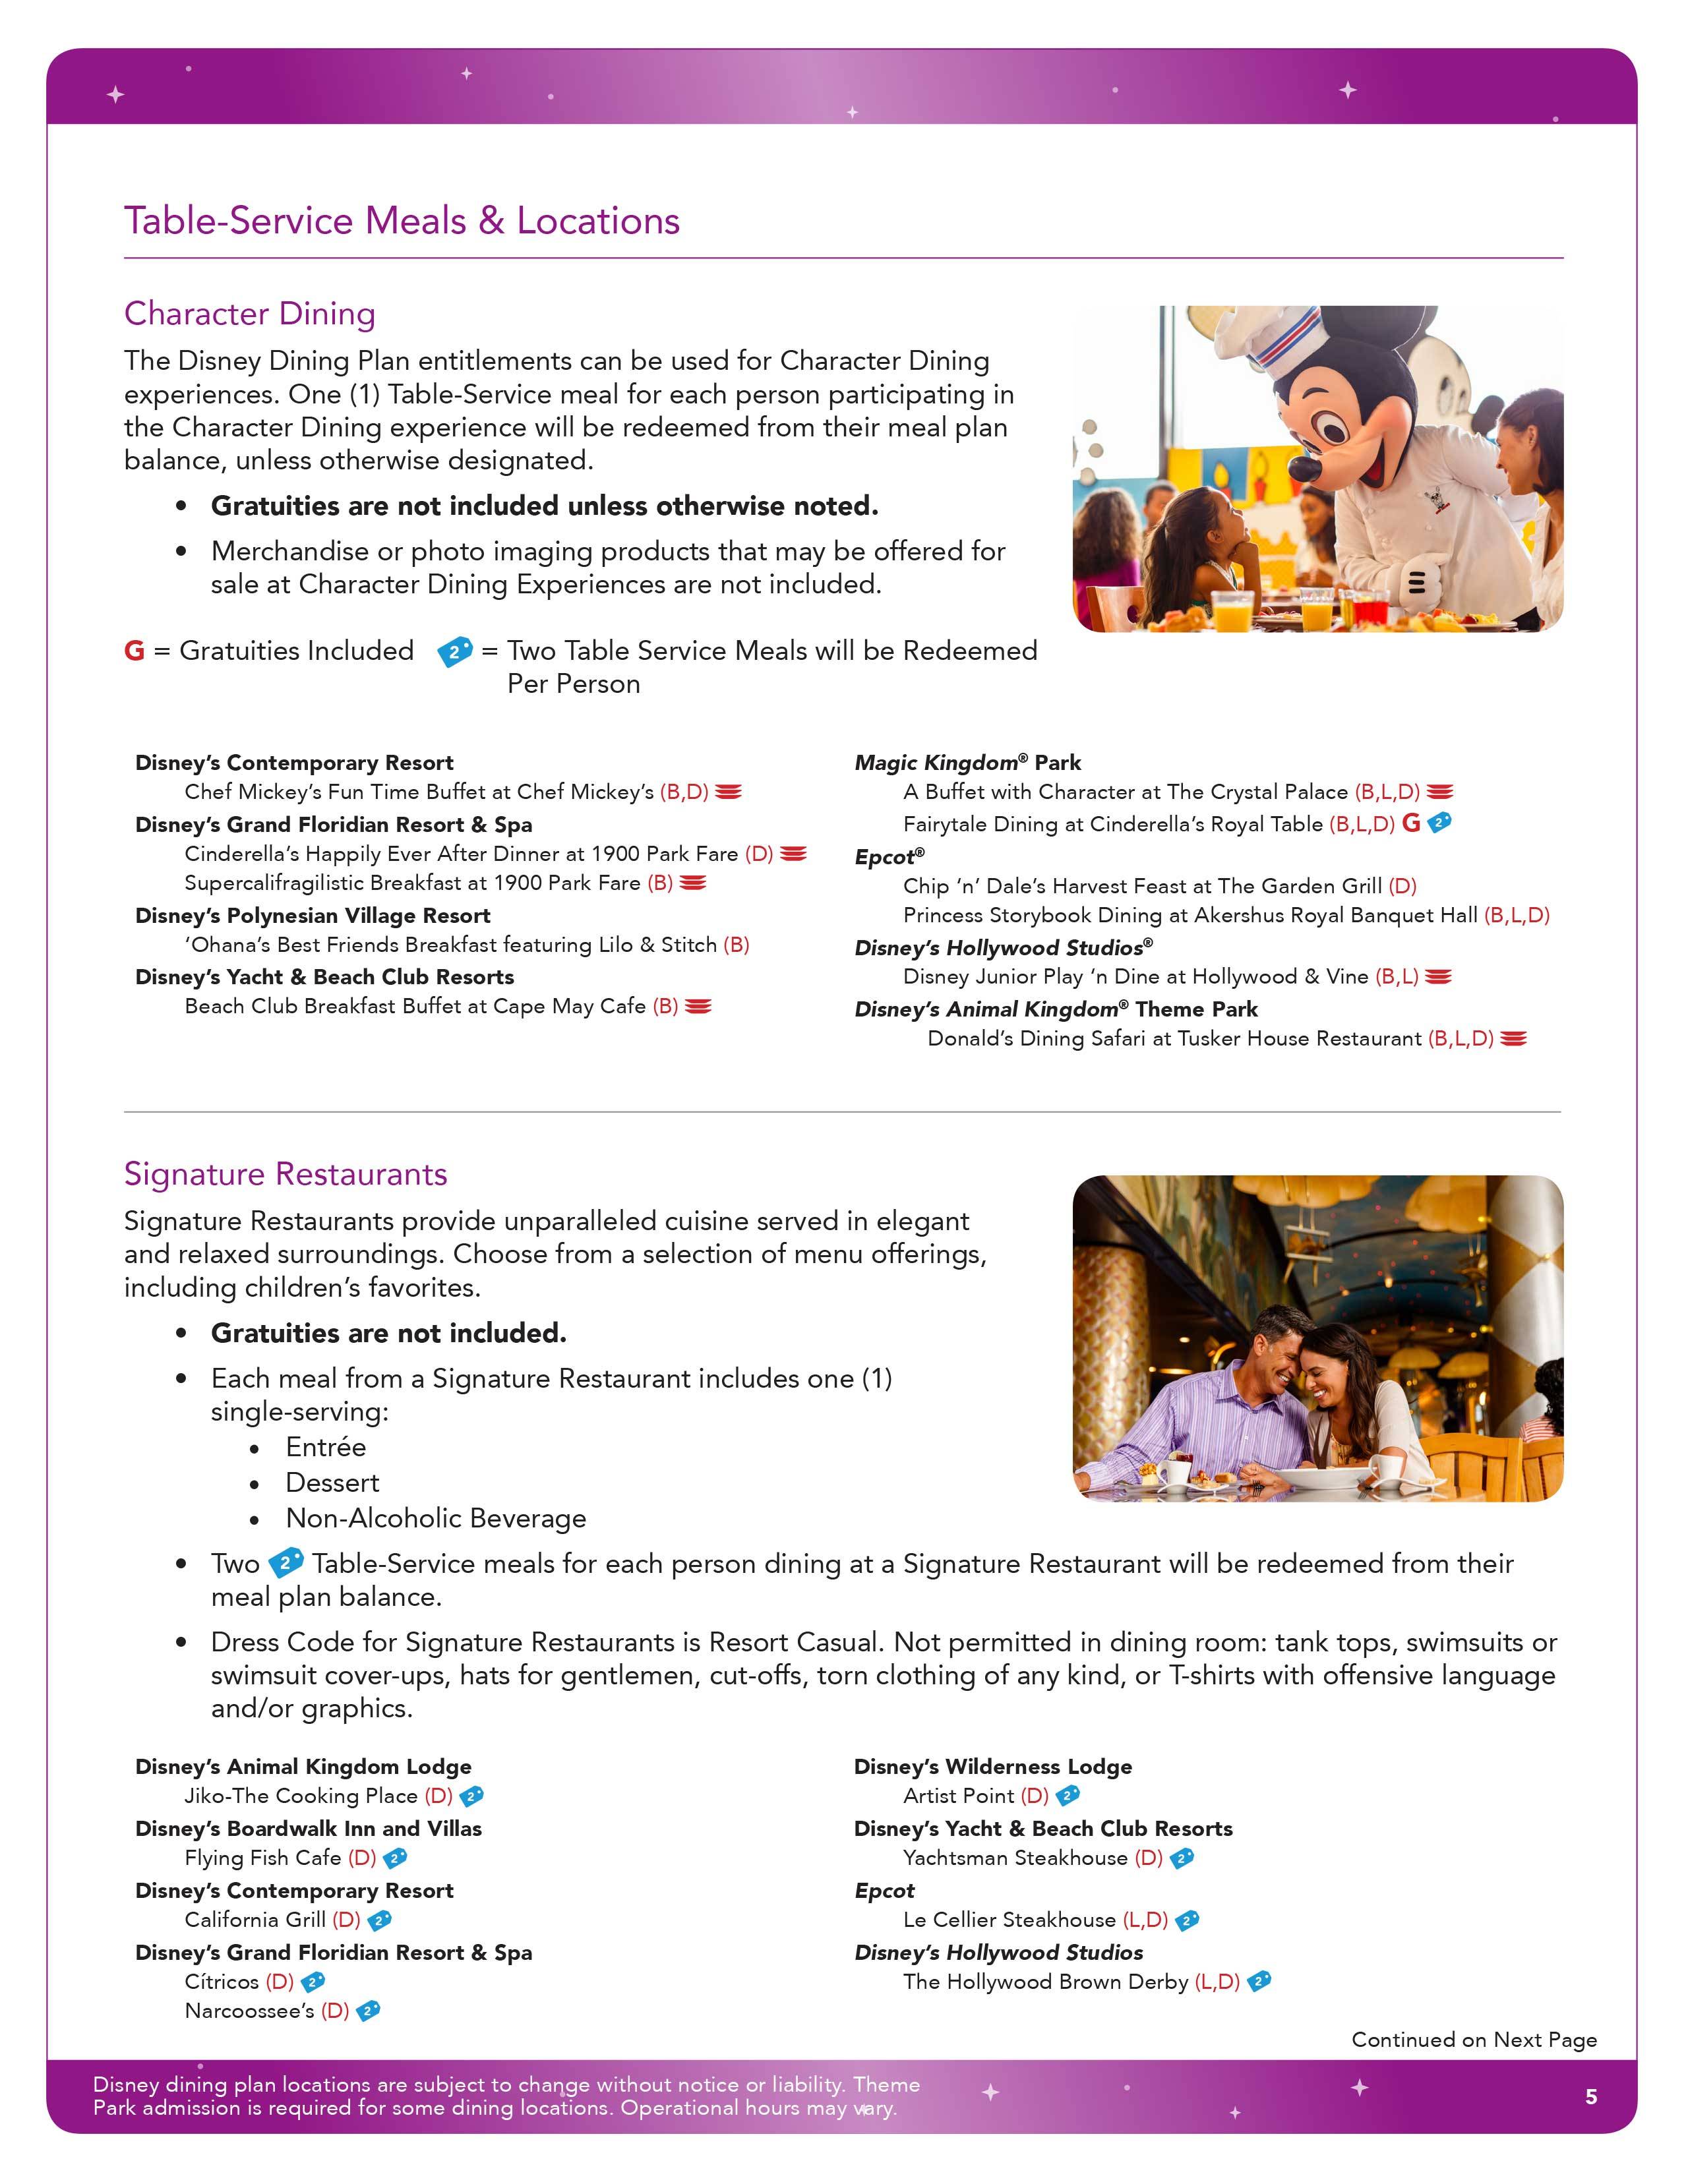 2016 Disney Dining Plan brochure - Page 5